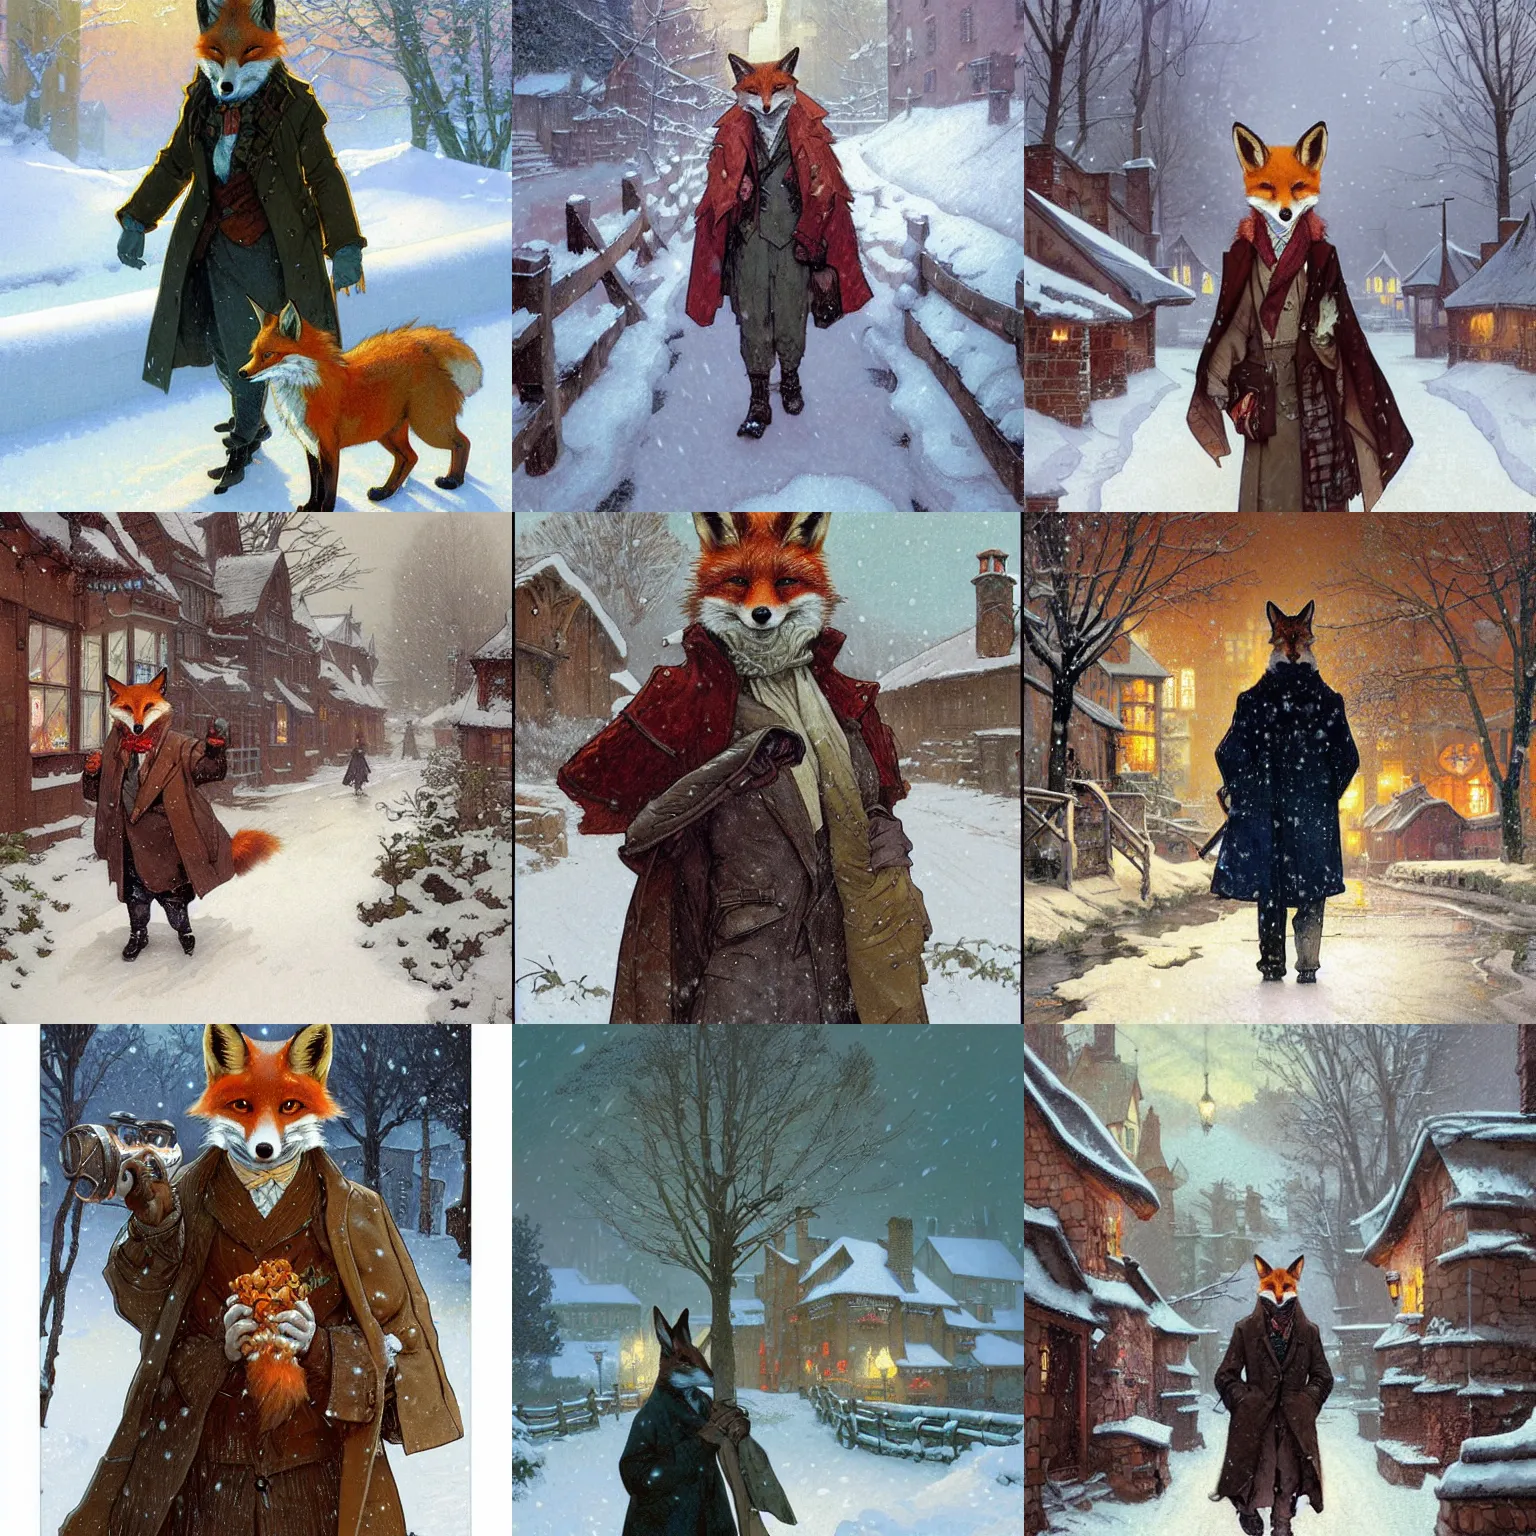 Prompt: an anthropomorhpic fox wearing a long coat in a snowy village, character illustration by greg rutkowski, thomas kinkade, alphonse mucha, norman rockwell